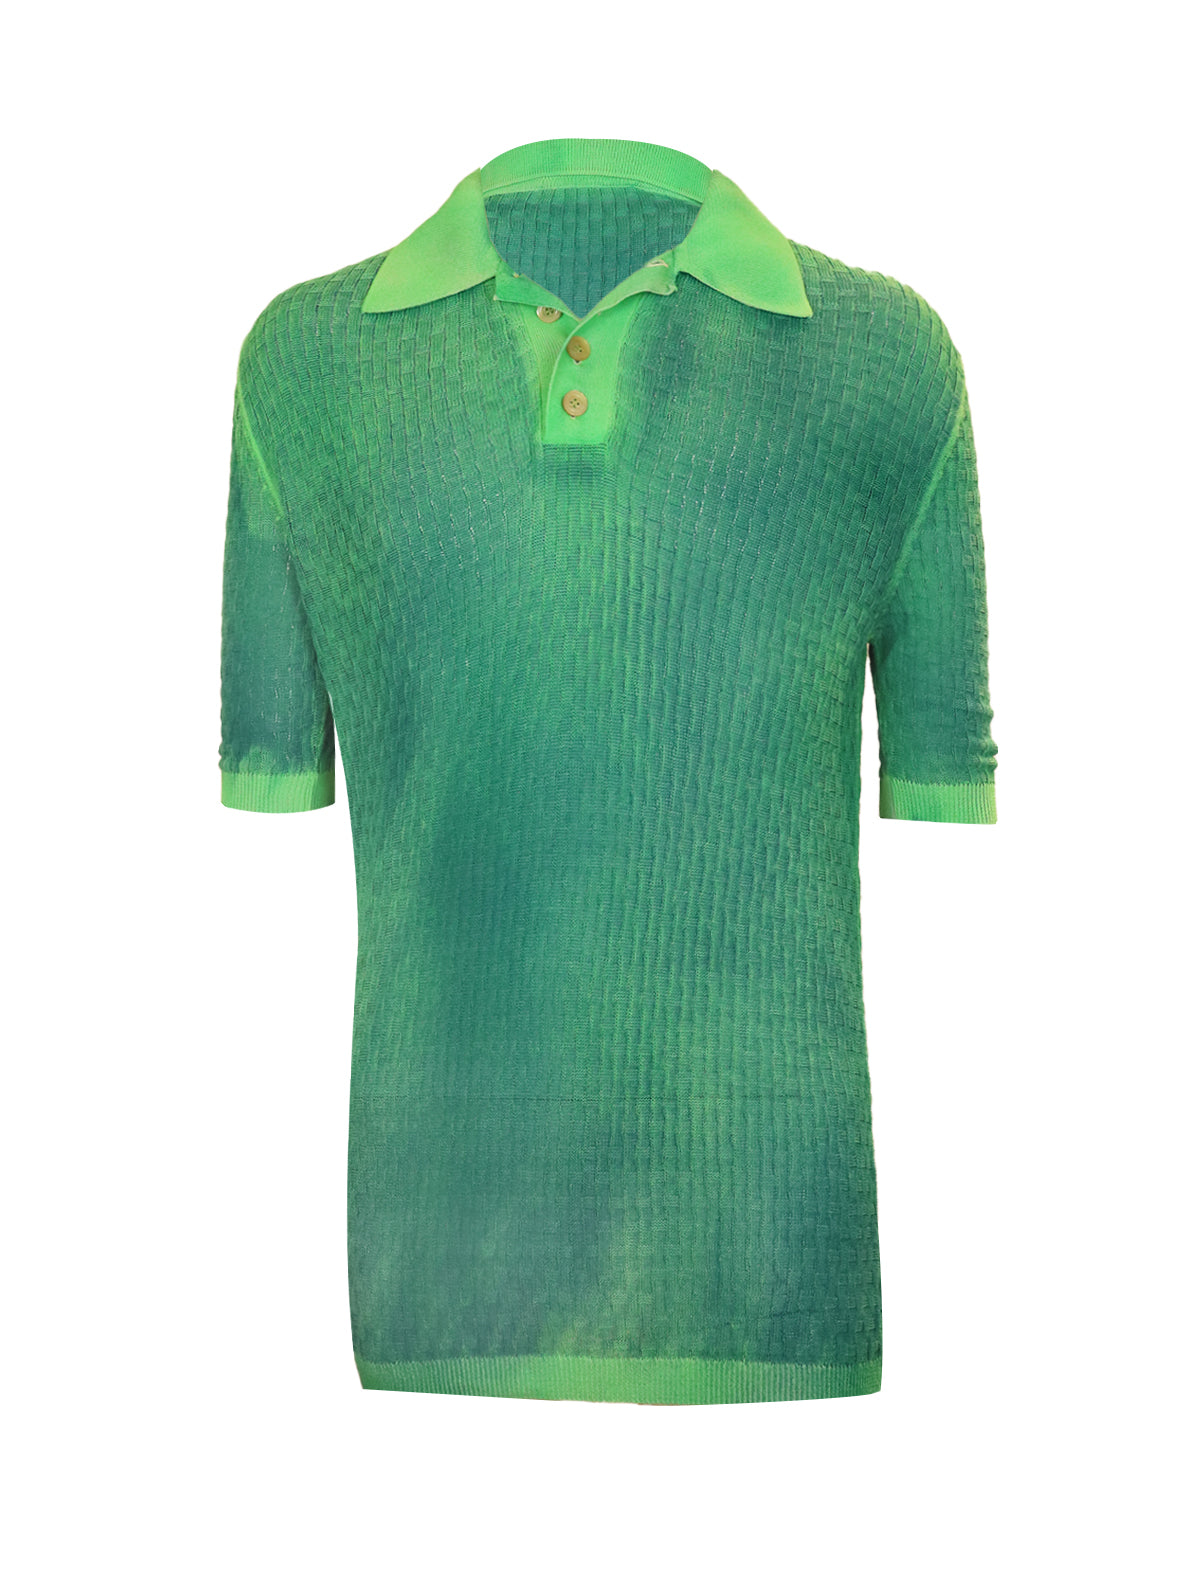 GABRIELE PASINI Tie-Dye Polo Shirt in Blue/Green